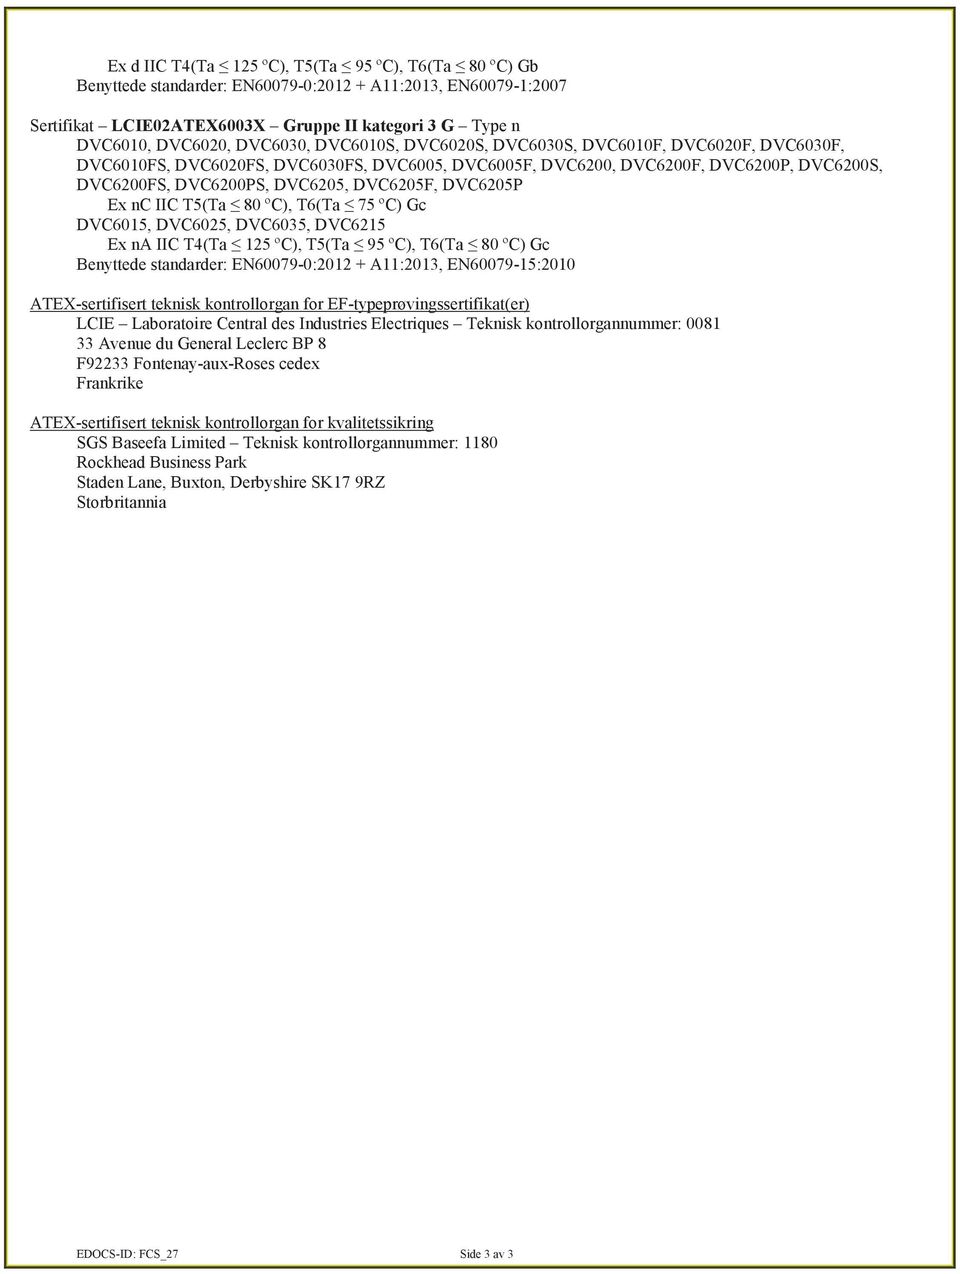 DVC6215 ºC) Gc Benyttede standarder: EN60079-0:2012 + A11:2013, EN60079-15:2010 ATEX-sertifisert teknisk kontrollorgan for EF-typeprøvingssertifikat(er) LCIE Laboratoire Central des Industries